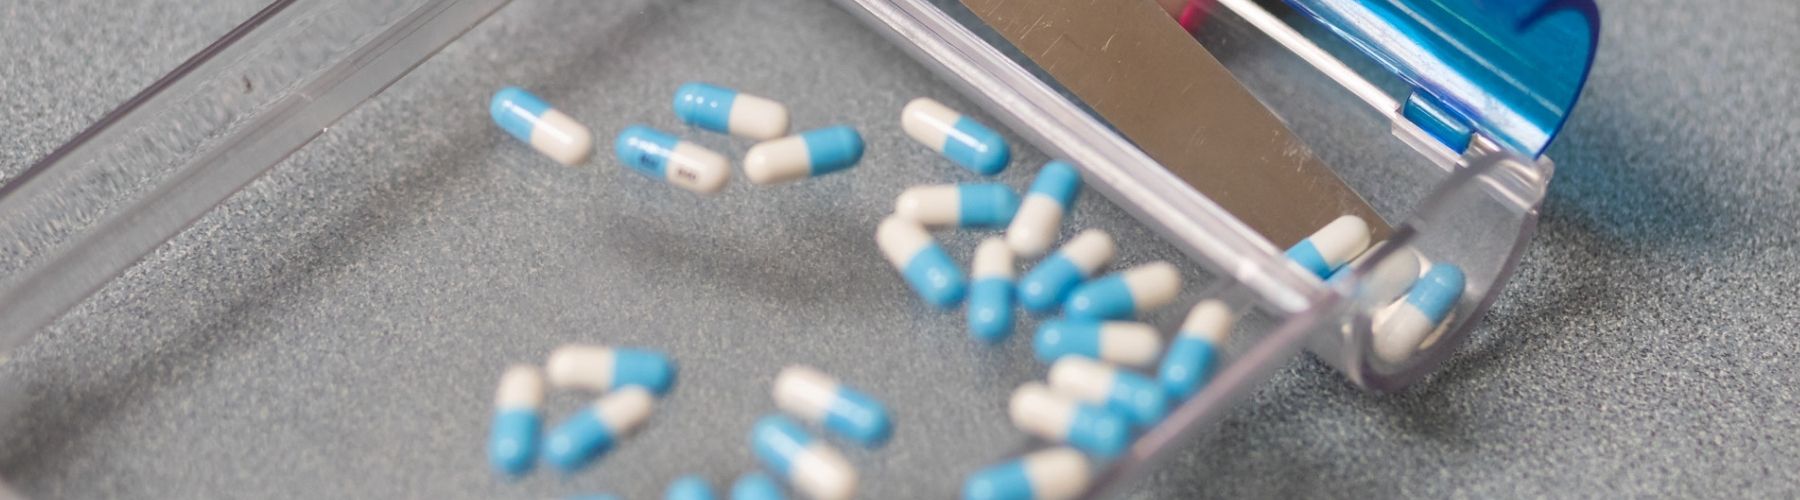 A closeup of a pill counter with pills inside.